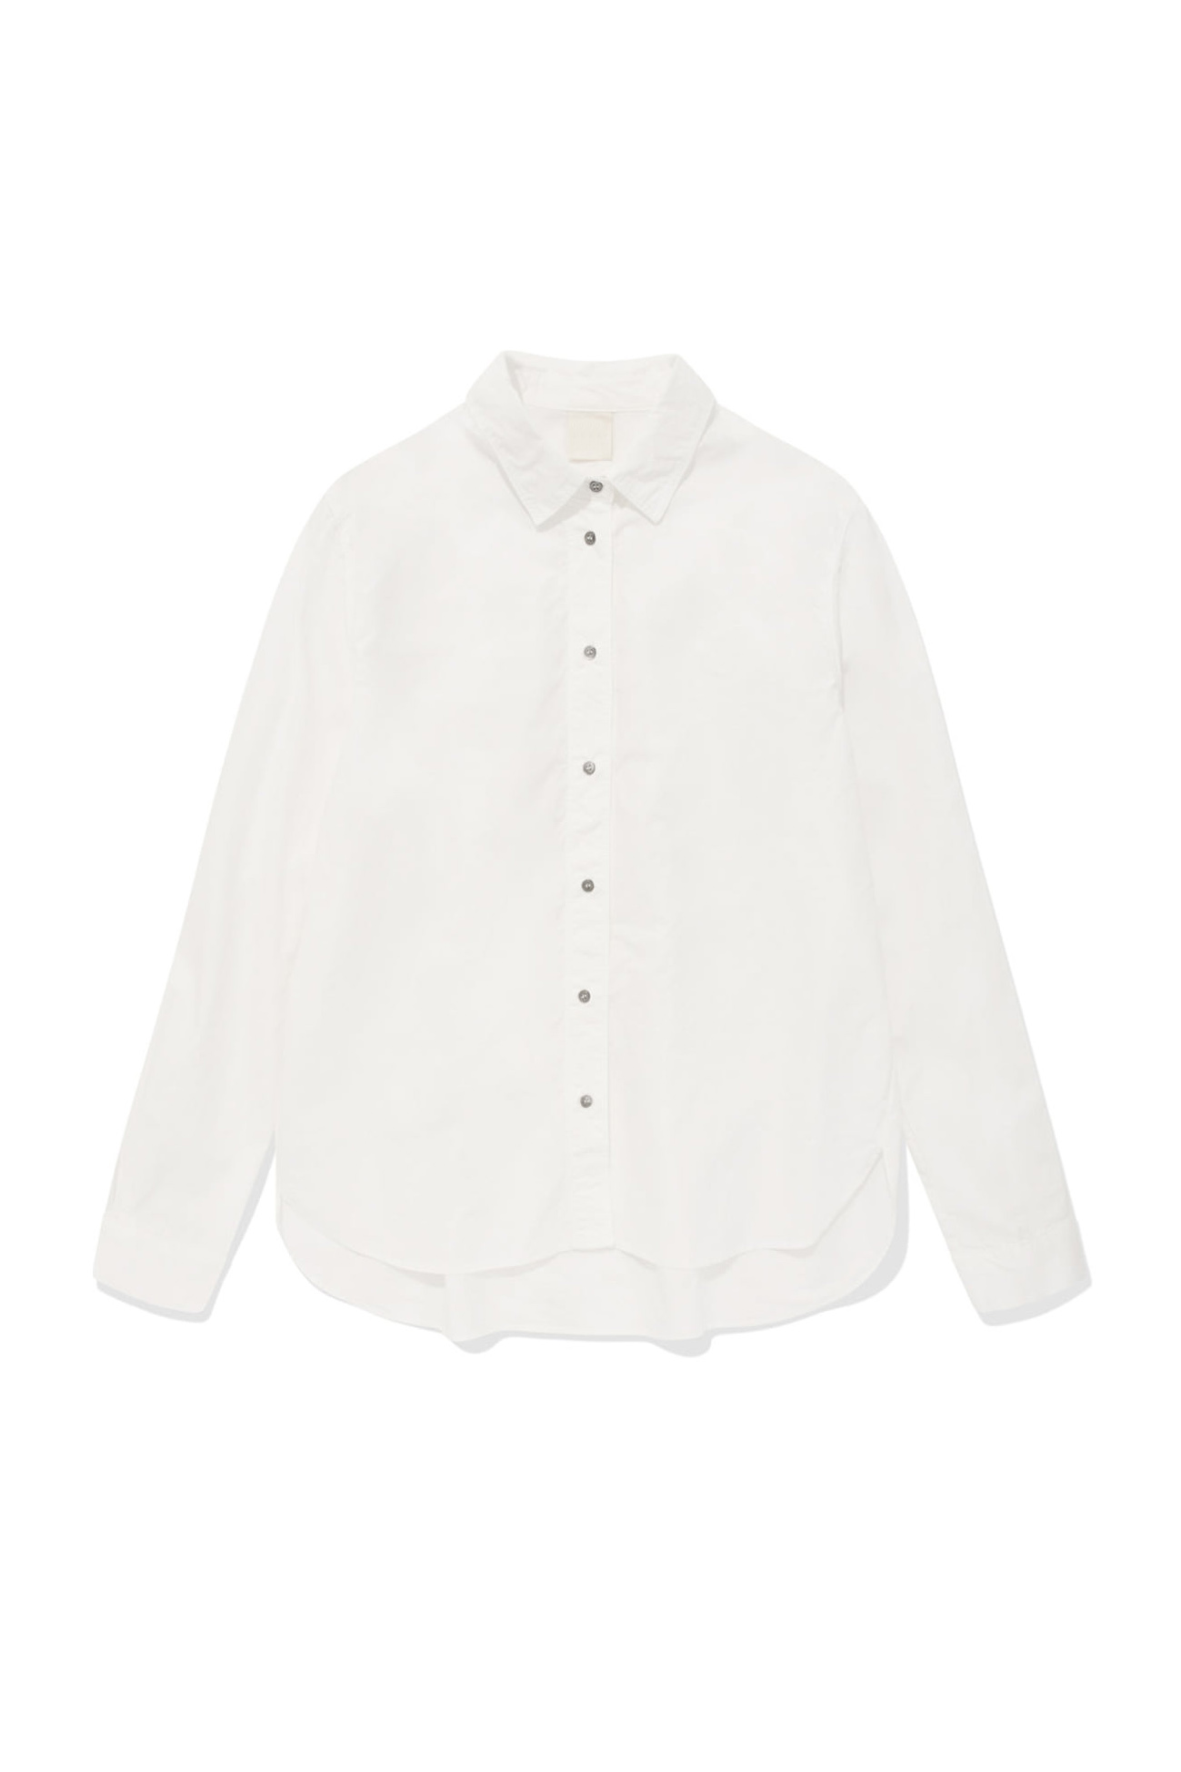 Mini collar white shirt